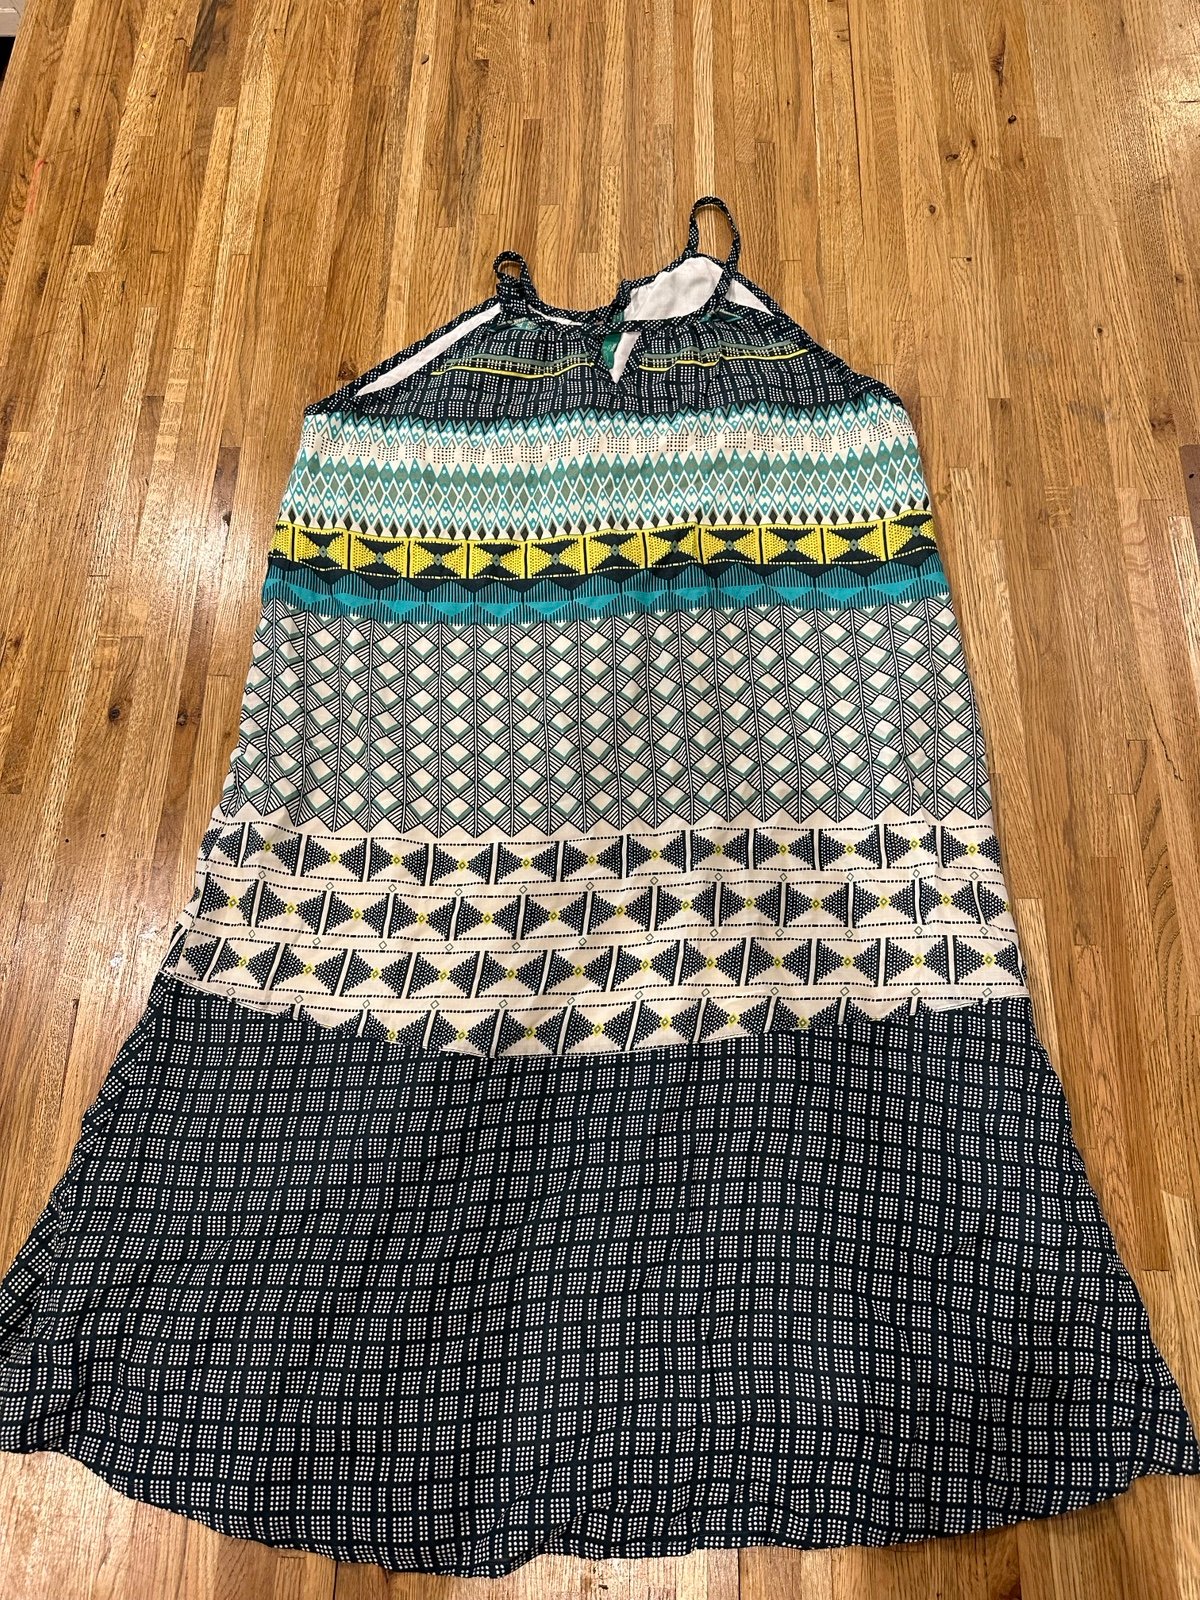 Gorgeous Prana Nara Keyhole Dress - Never Worn p9Kd3OSz1 all for you